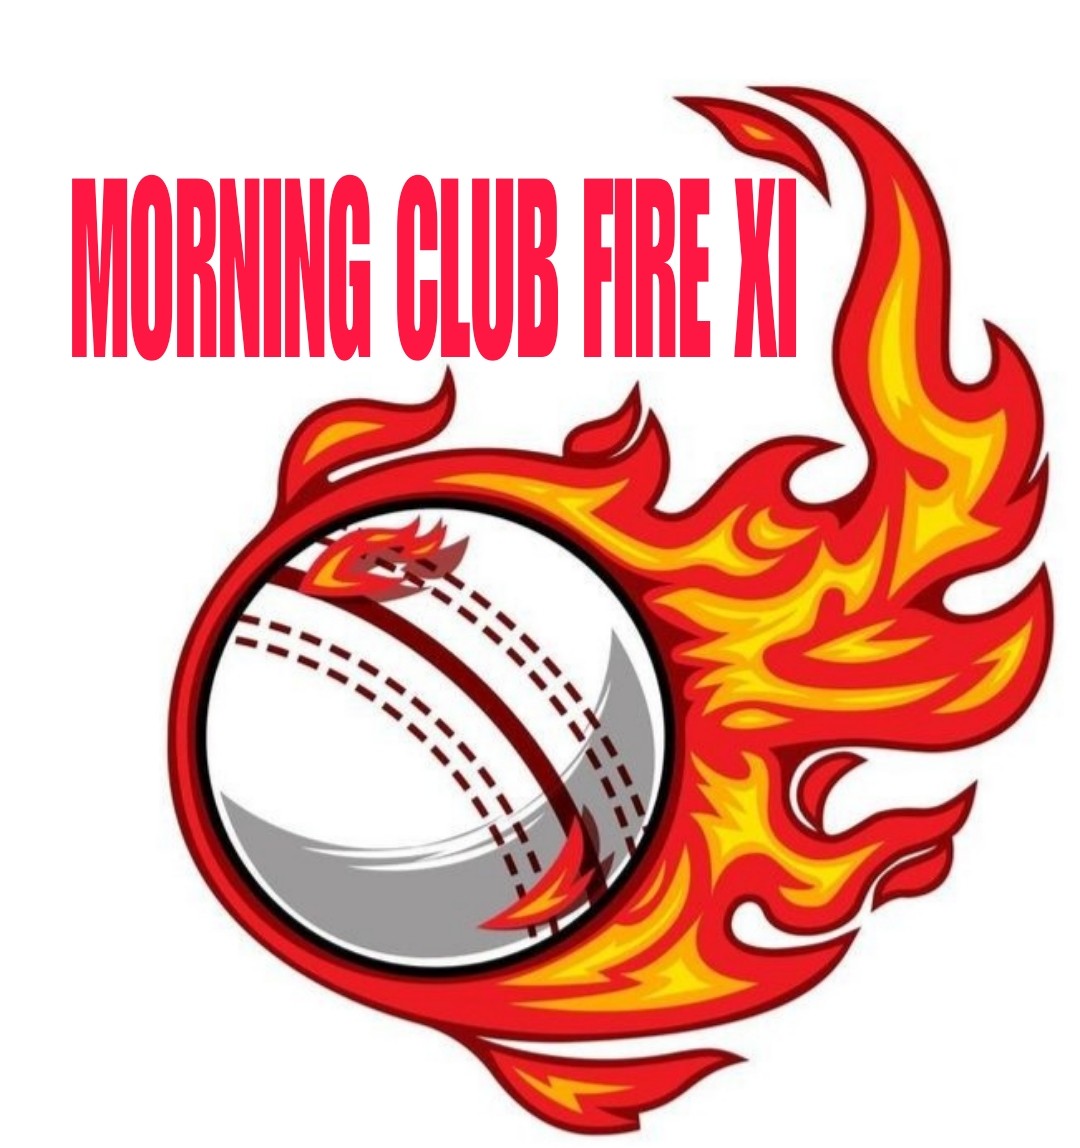 MORNING CLUB FIRE XI